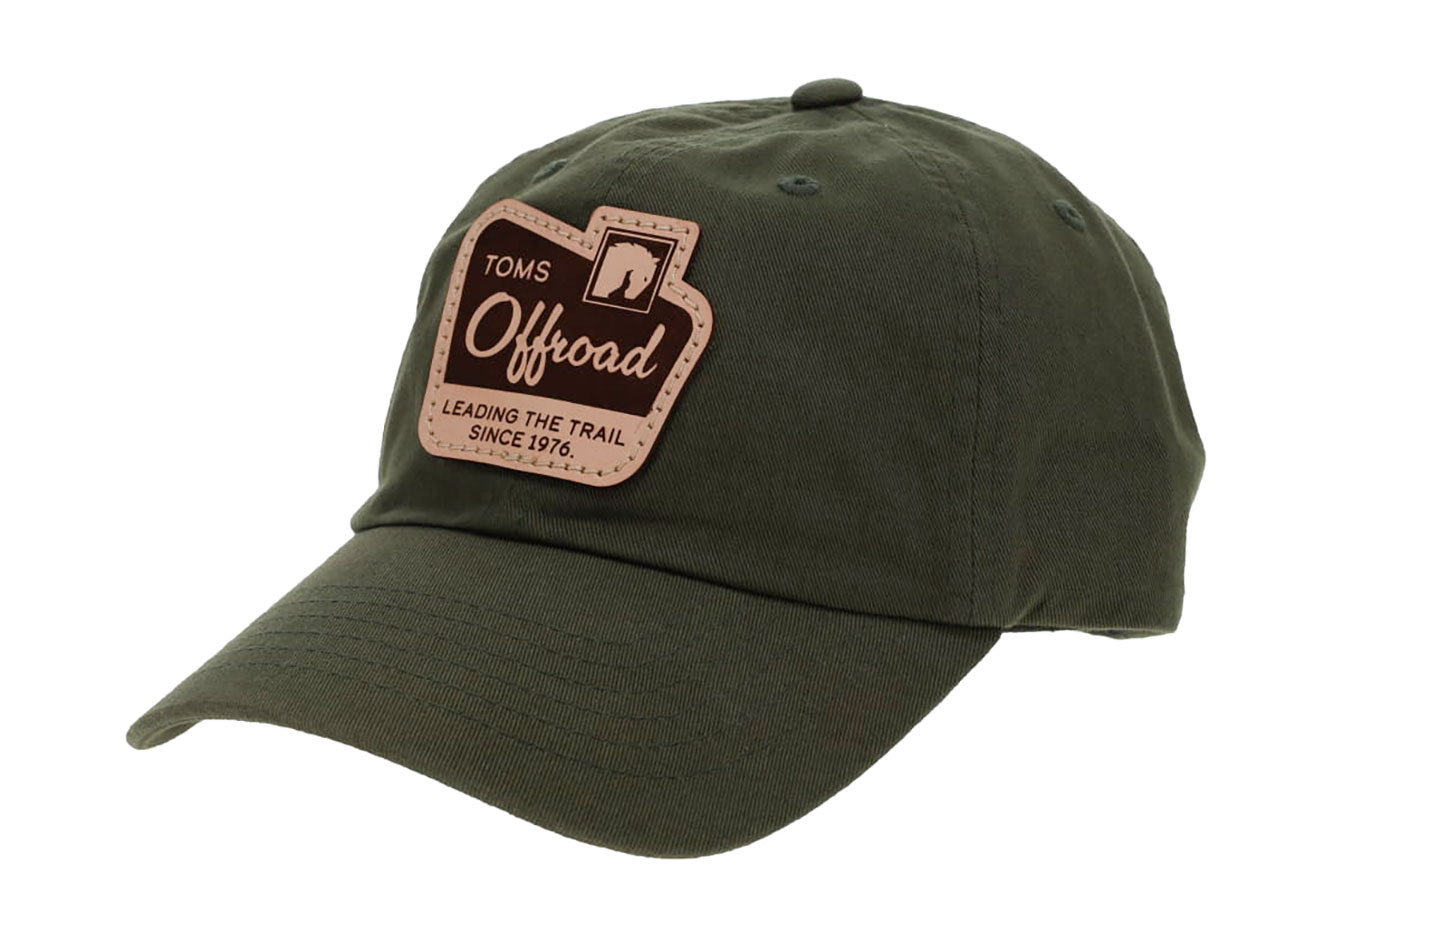 Tom's Offroad Hat - National Parks, Olive Dad Hat w/ Natural Patch